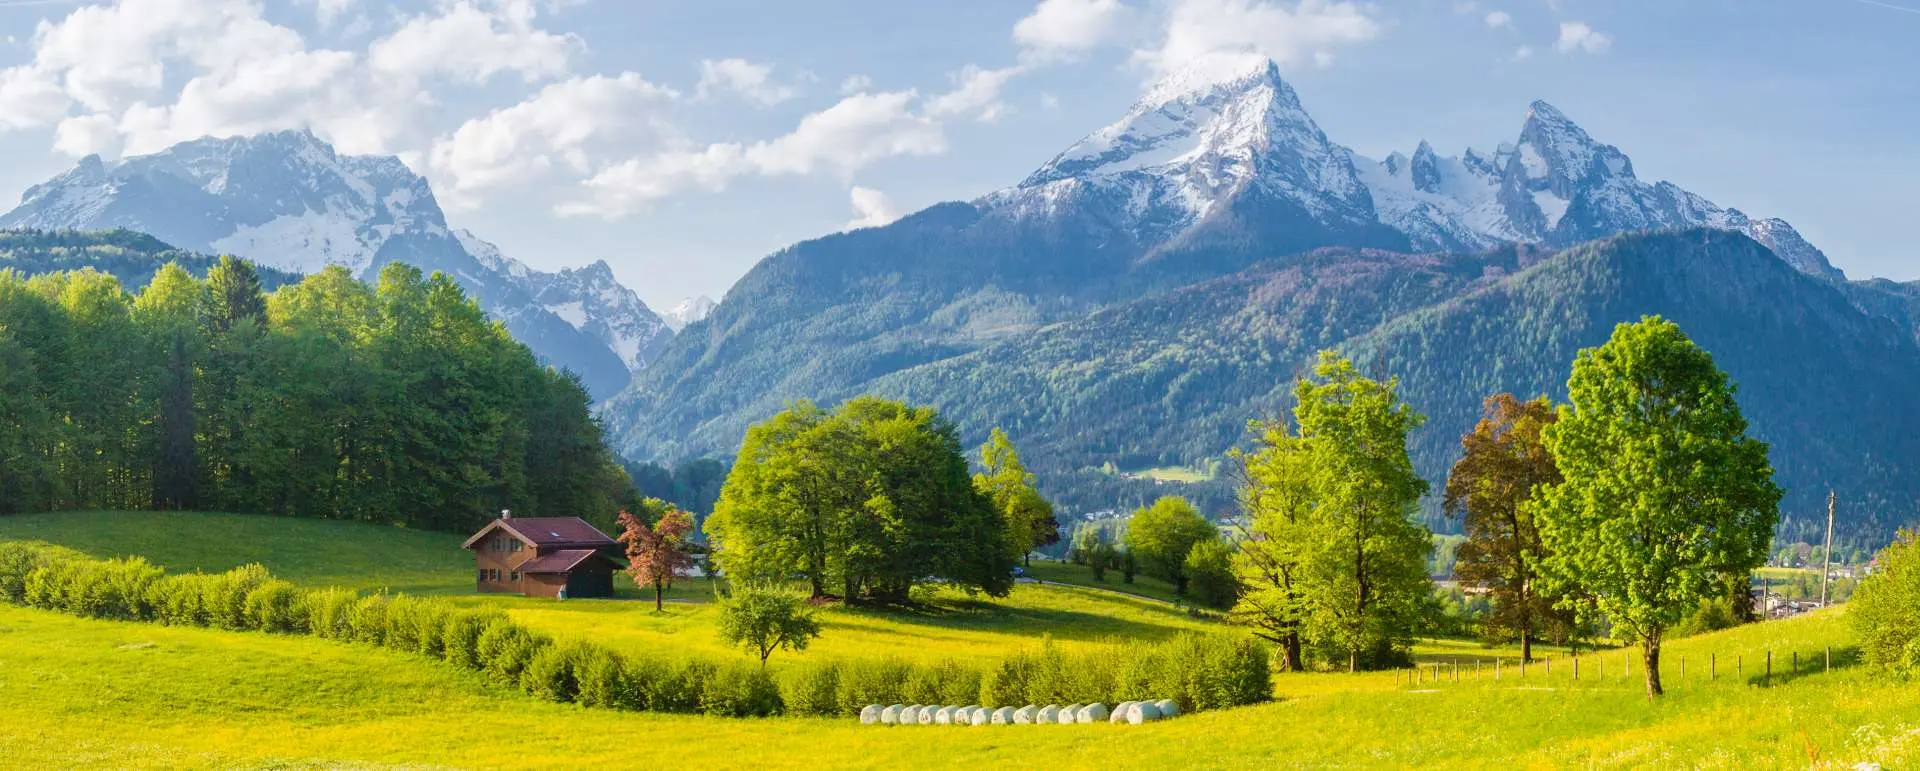 Berchtesgadener Land - Luxury group accommodation for travelers